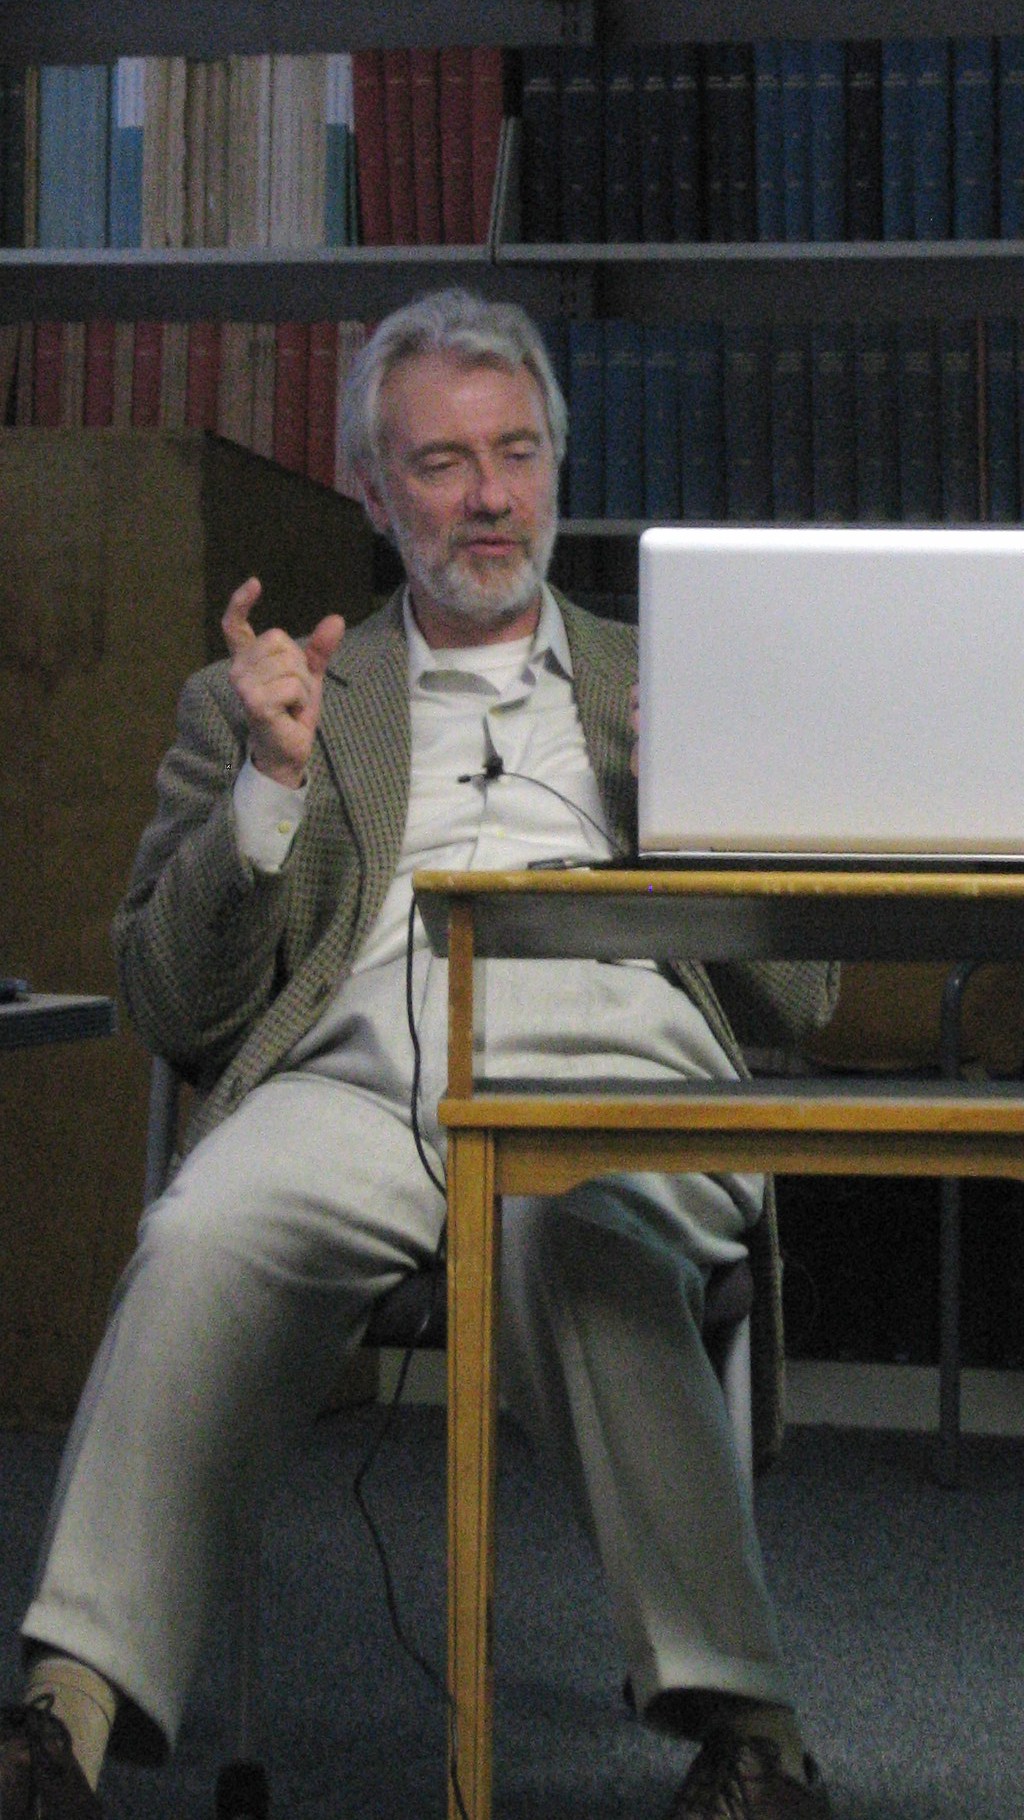 Speaking at UCLA 3/8/2008